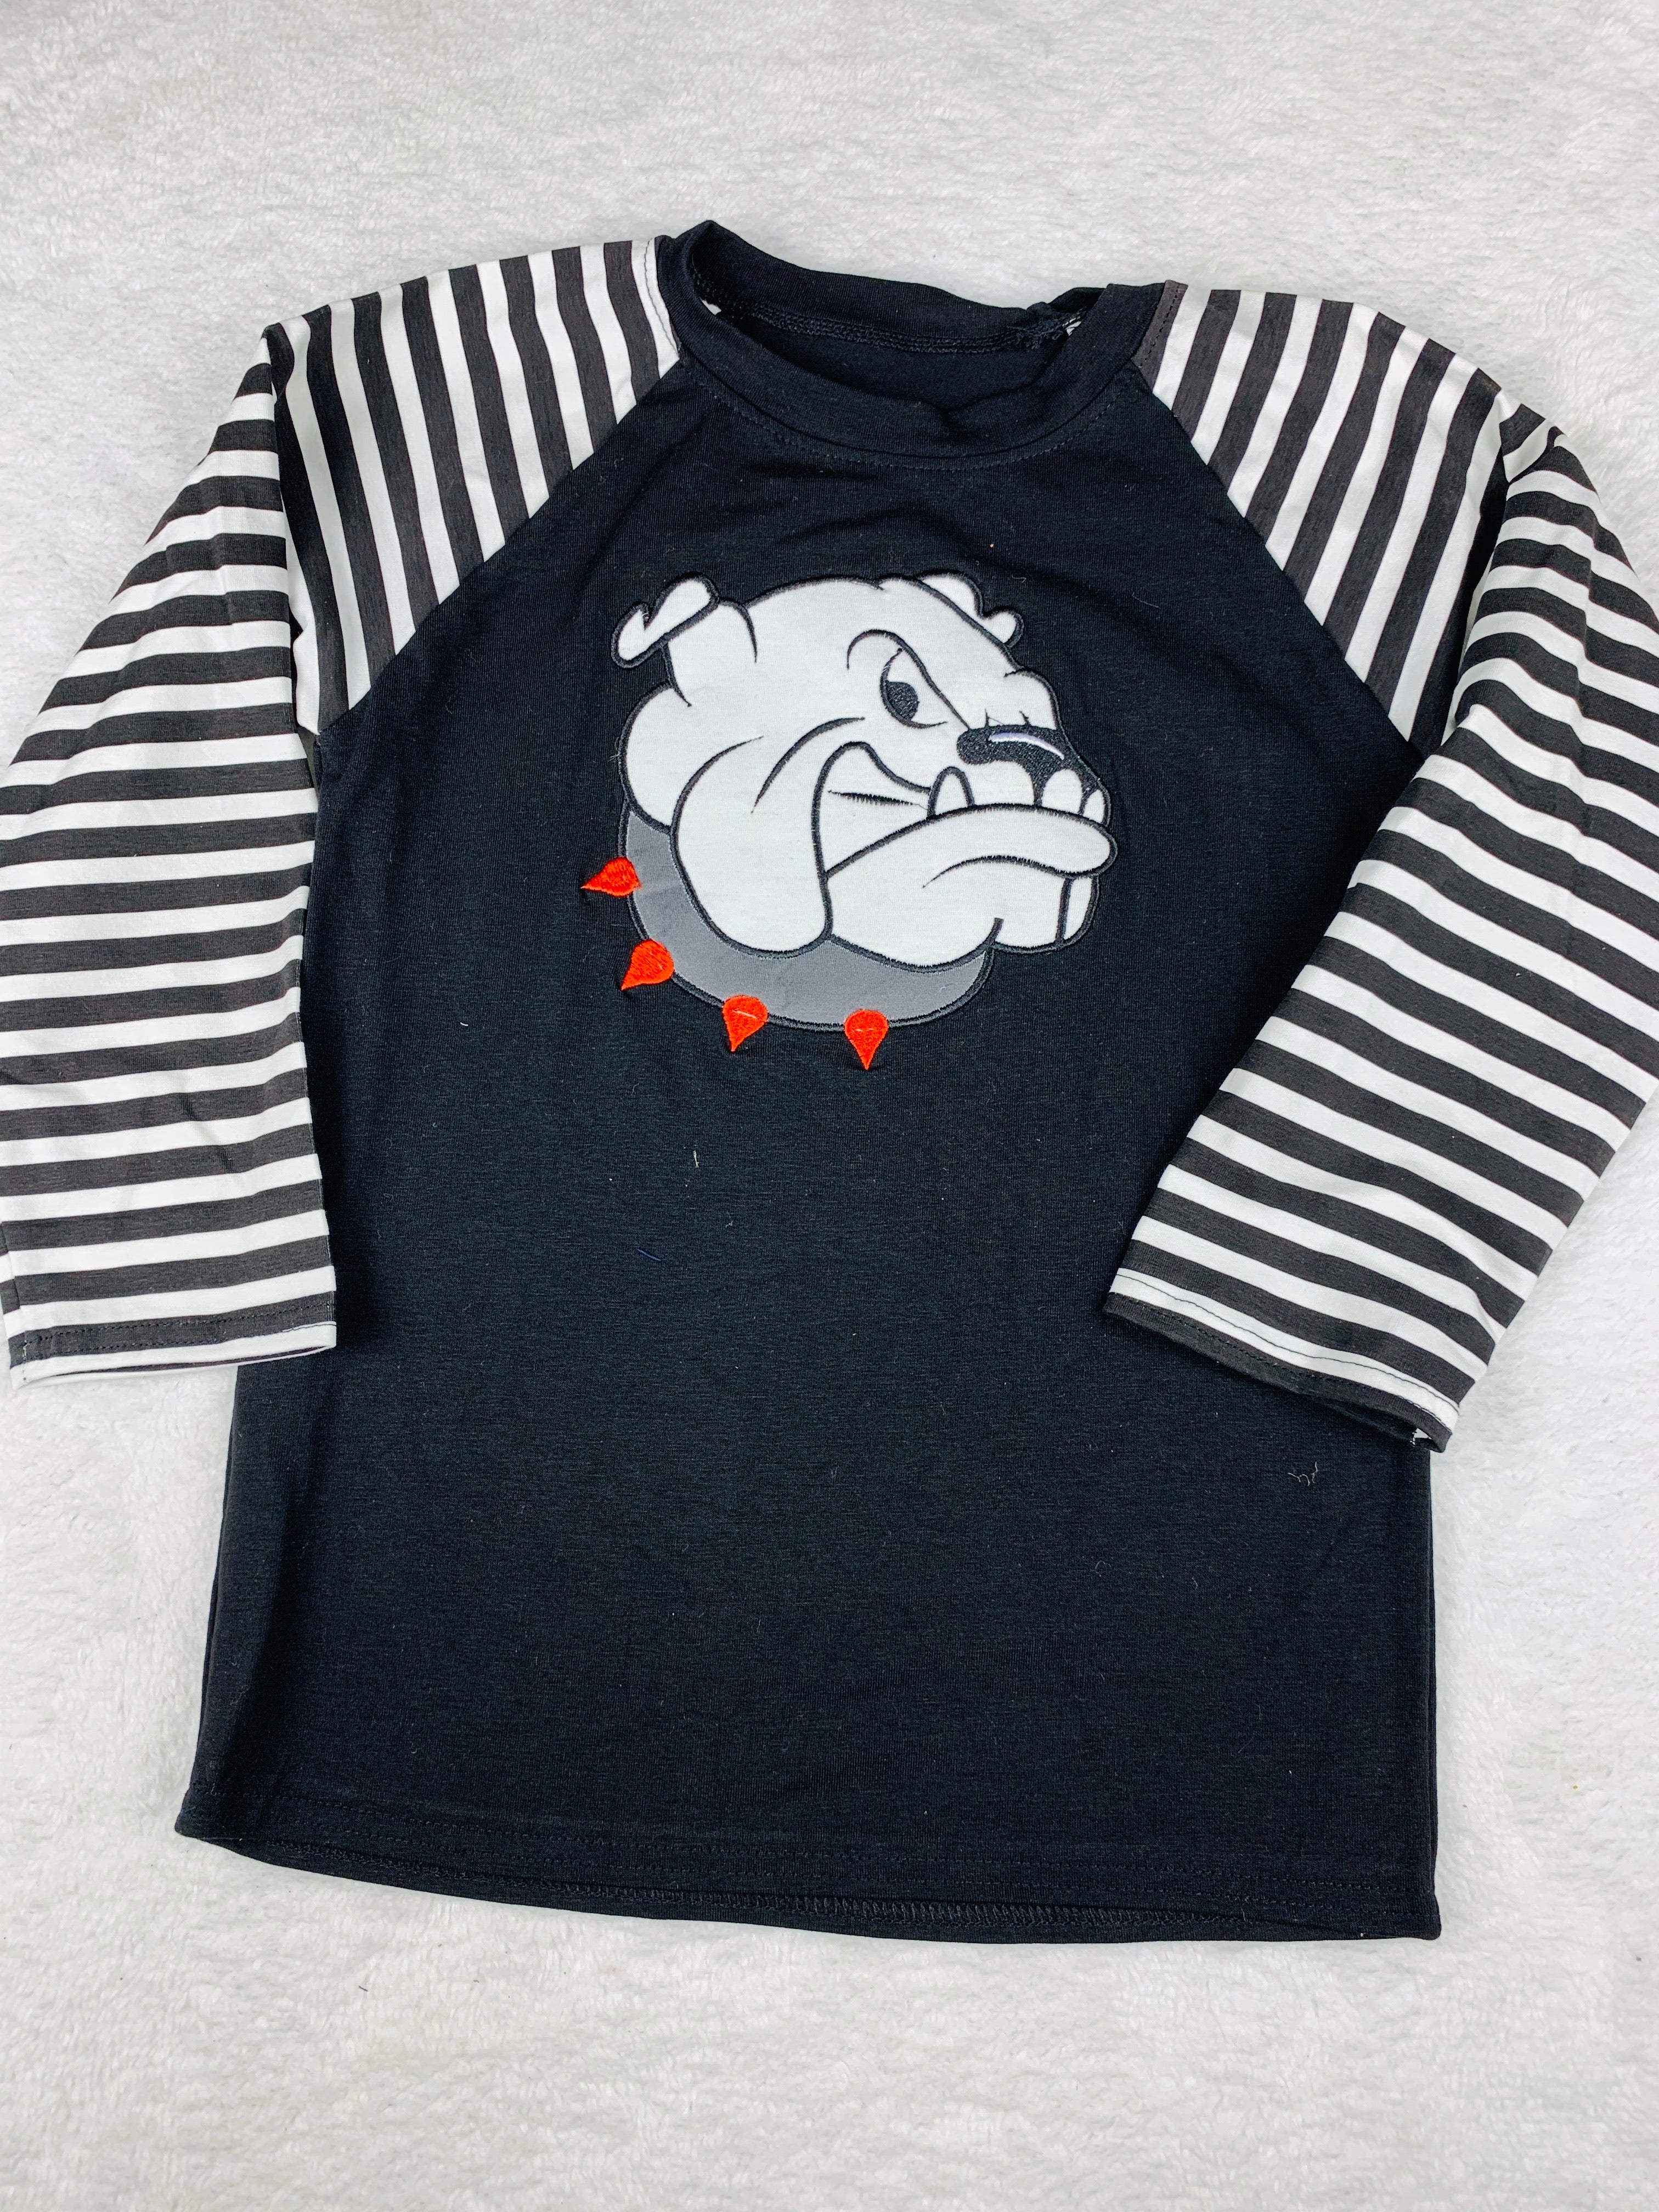 Georgia Bulldogs Shirt SALE!